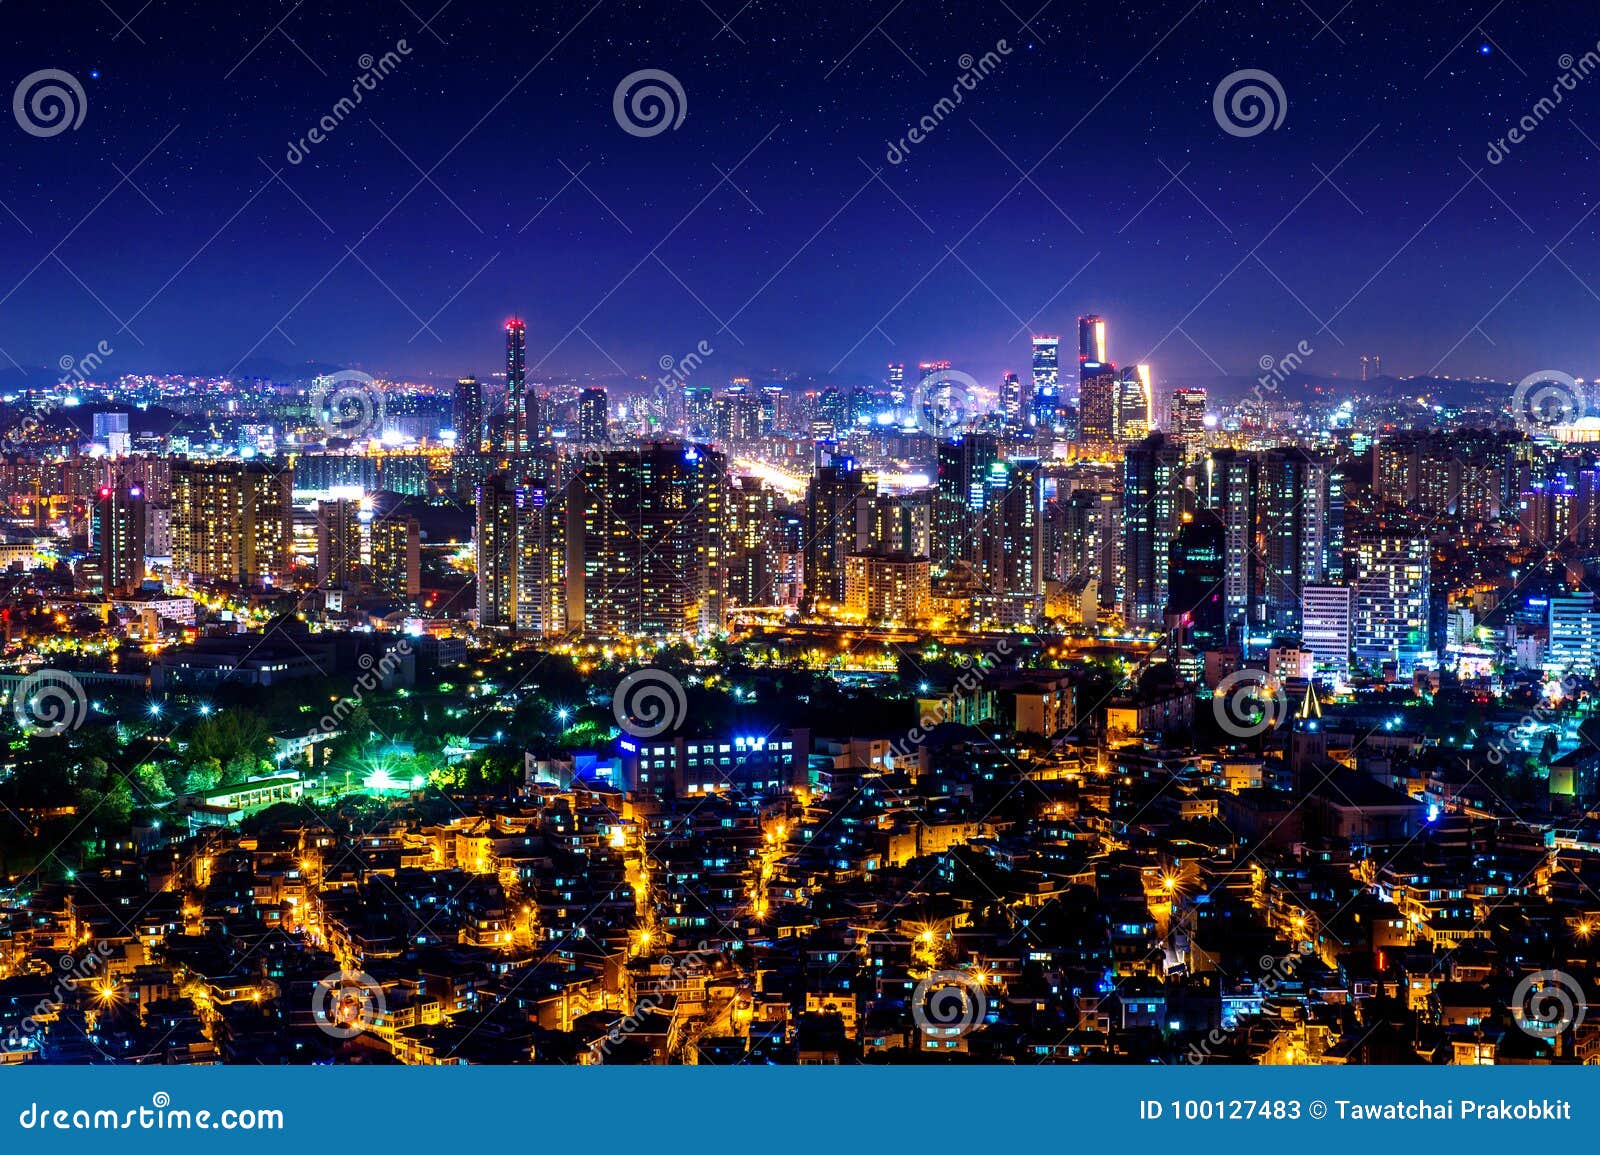 cityscape at night in seoul, south korea